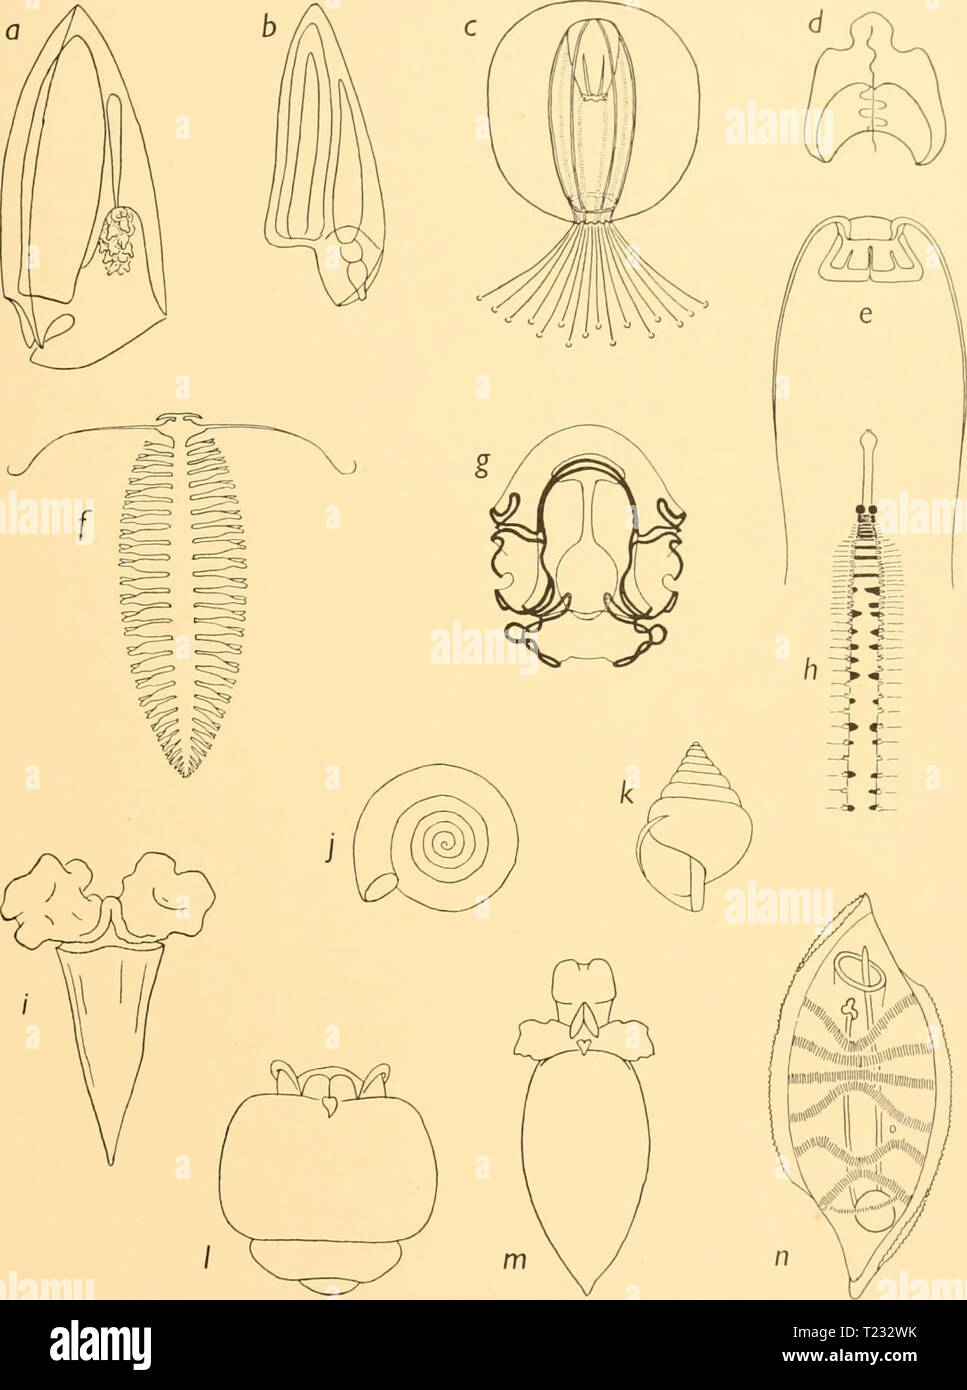 Archive image from page 84 of Discovery reports (1934) Discovery reports  discoveryreports09inst Year: 1934  Fig. 2. Species of the Antarctic macroplankton. a, Diphyes antarctica, anterior nectophore, x 2. b, Dhnophyes arctica, anterior nectophore (after Moser), x 7. c, Sibogita borchgrevinki (after E. T. Browne), x ij. d, Pyrostephos vanhoffeni, nectophore, x 5. e, Solmandella sp., x 2. /, Tomopteris carpenteri, x 1. g, Auricularia antarctica, x 8. //, Vanadis antarctica, anterior portion, x 1. i, Cleodora sulcata, x 3. j, Limacina helicina, x 5. k, Limacina balea, x 15. /, Spongiobranchaea a Stock Photo